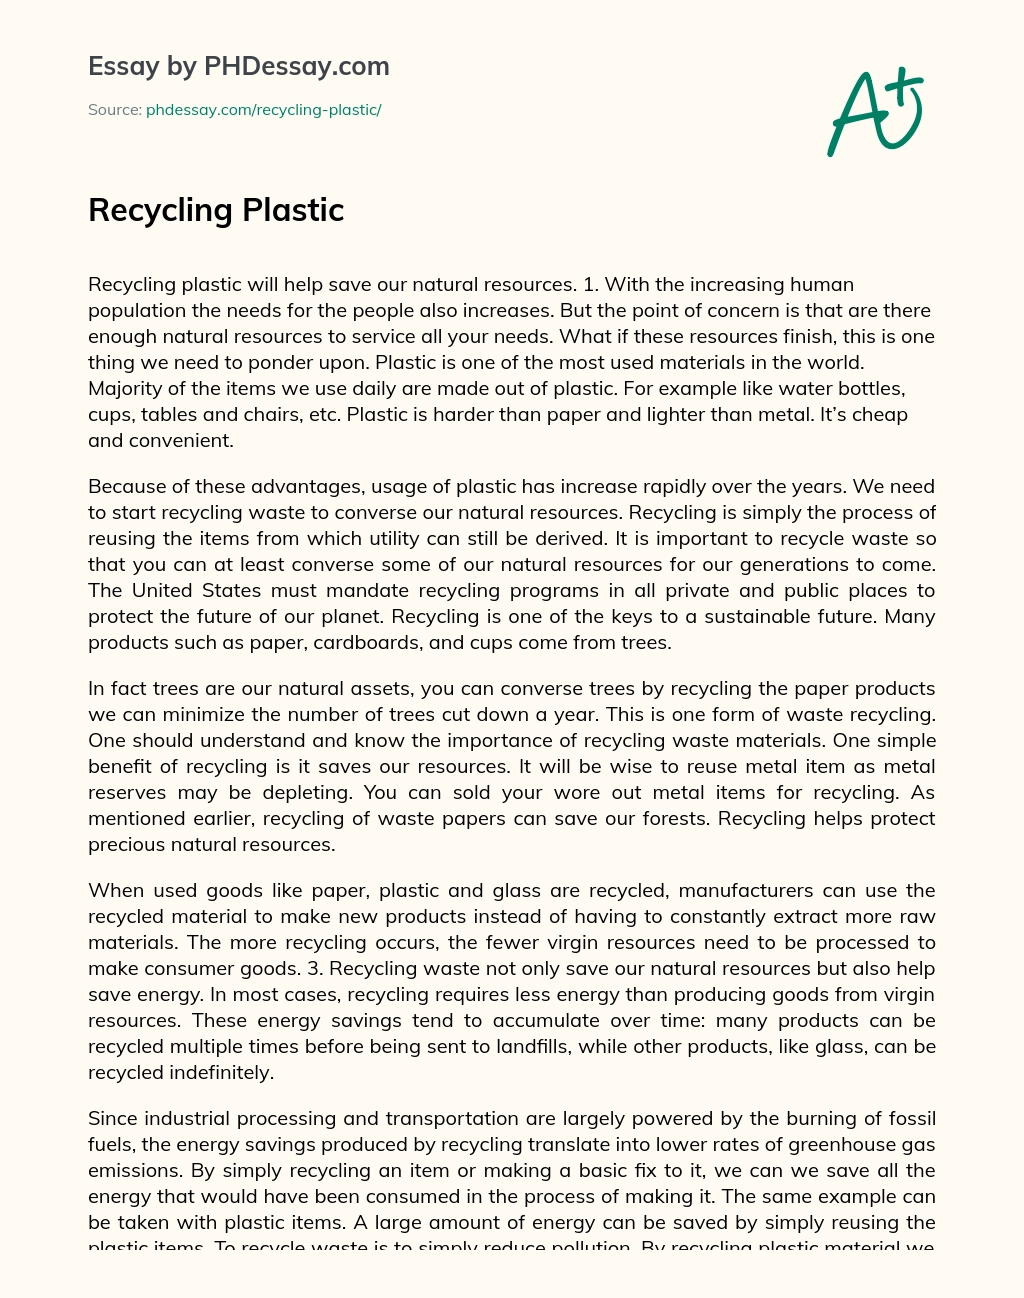 Recycling Plastic essay